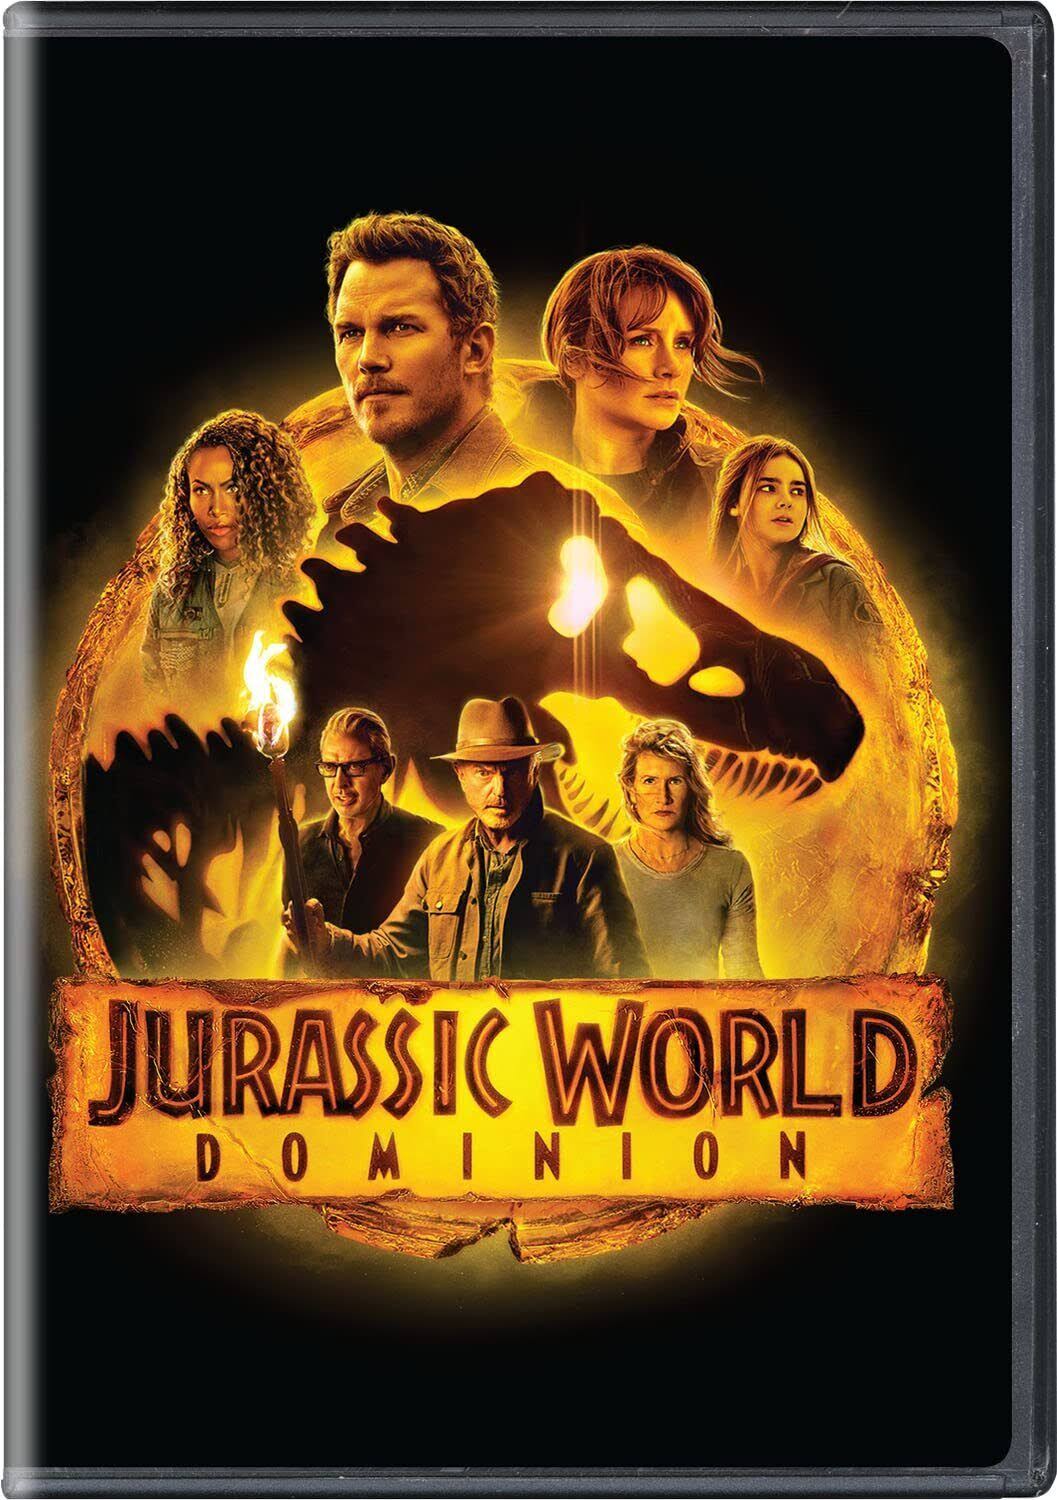 Jurassic World Dominion [DVD]